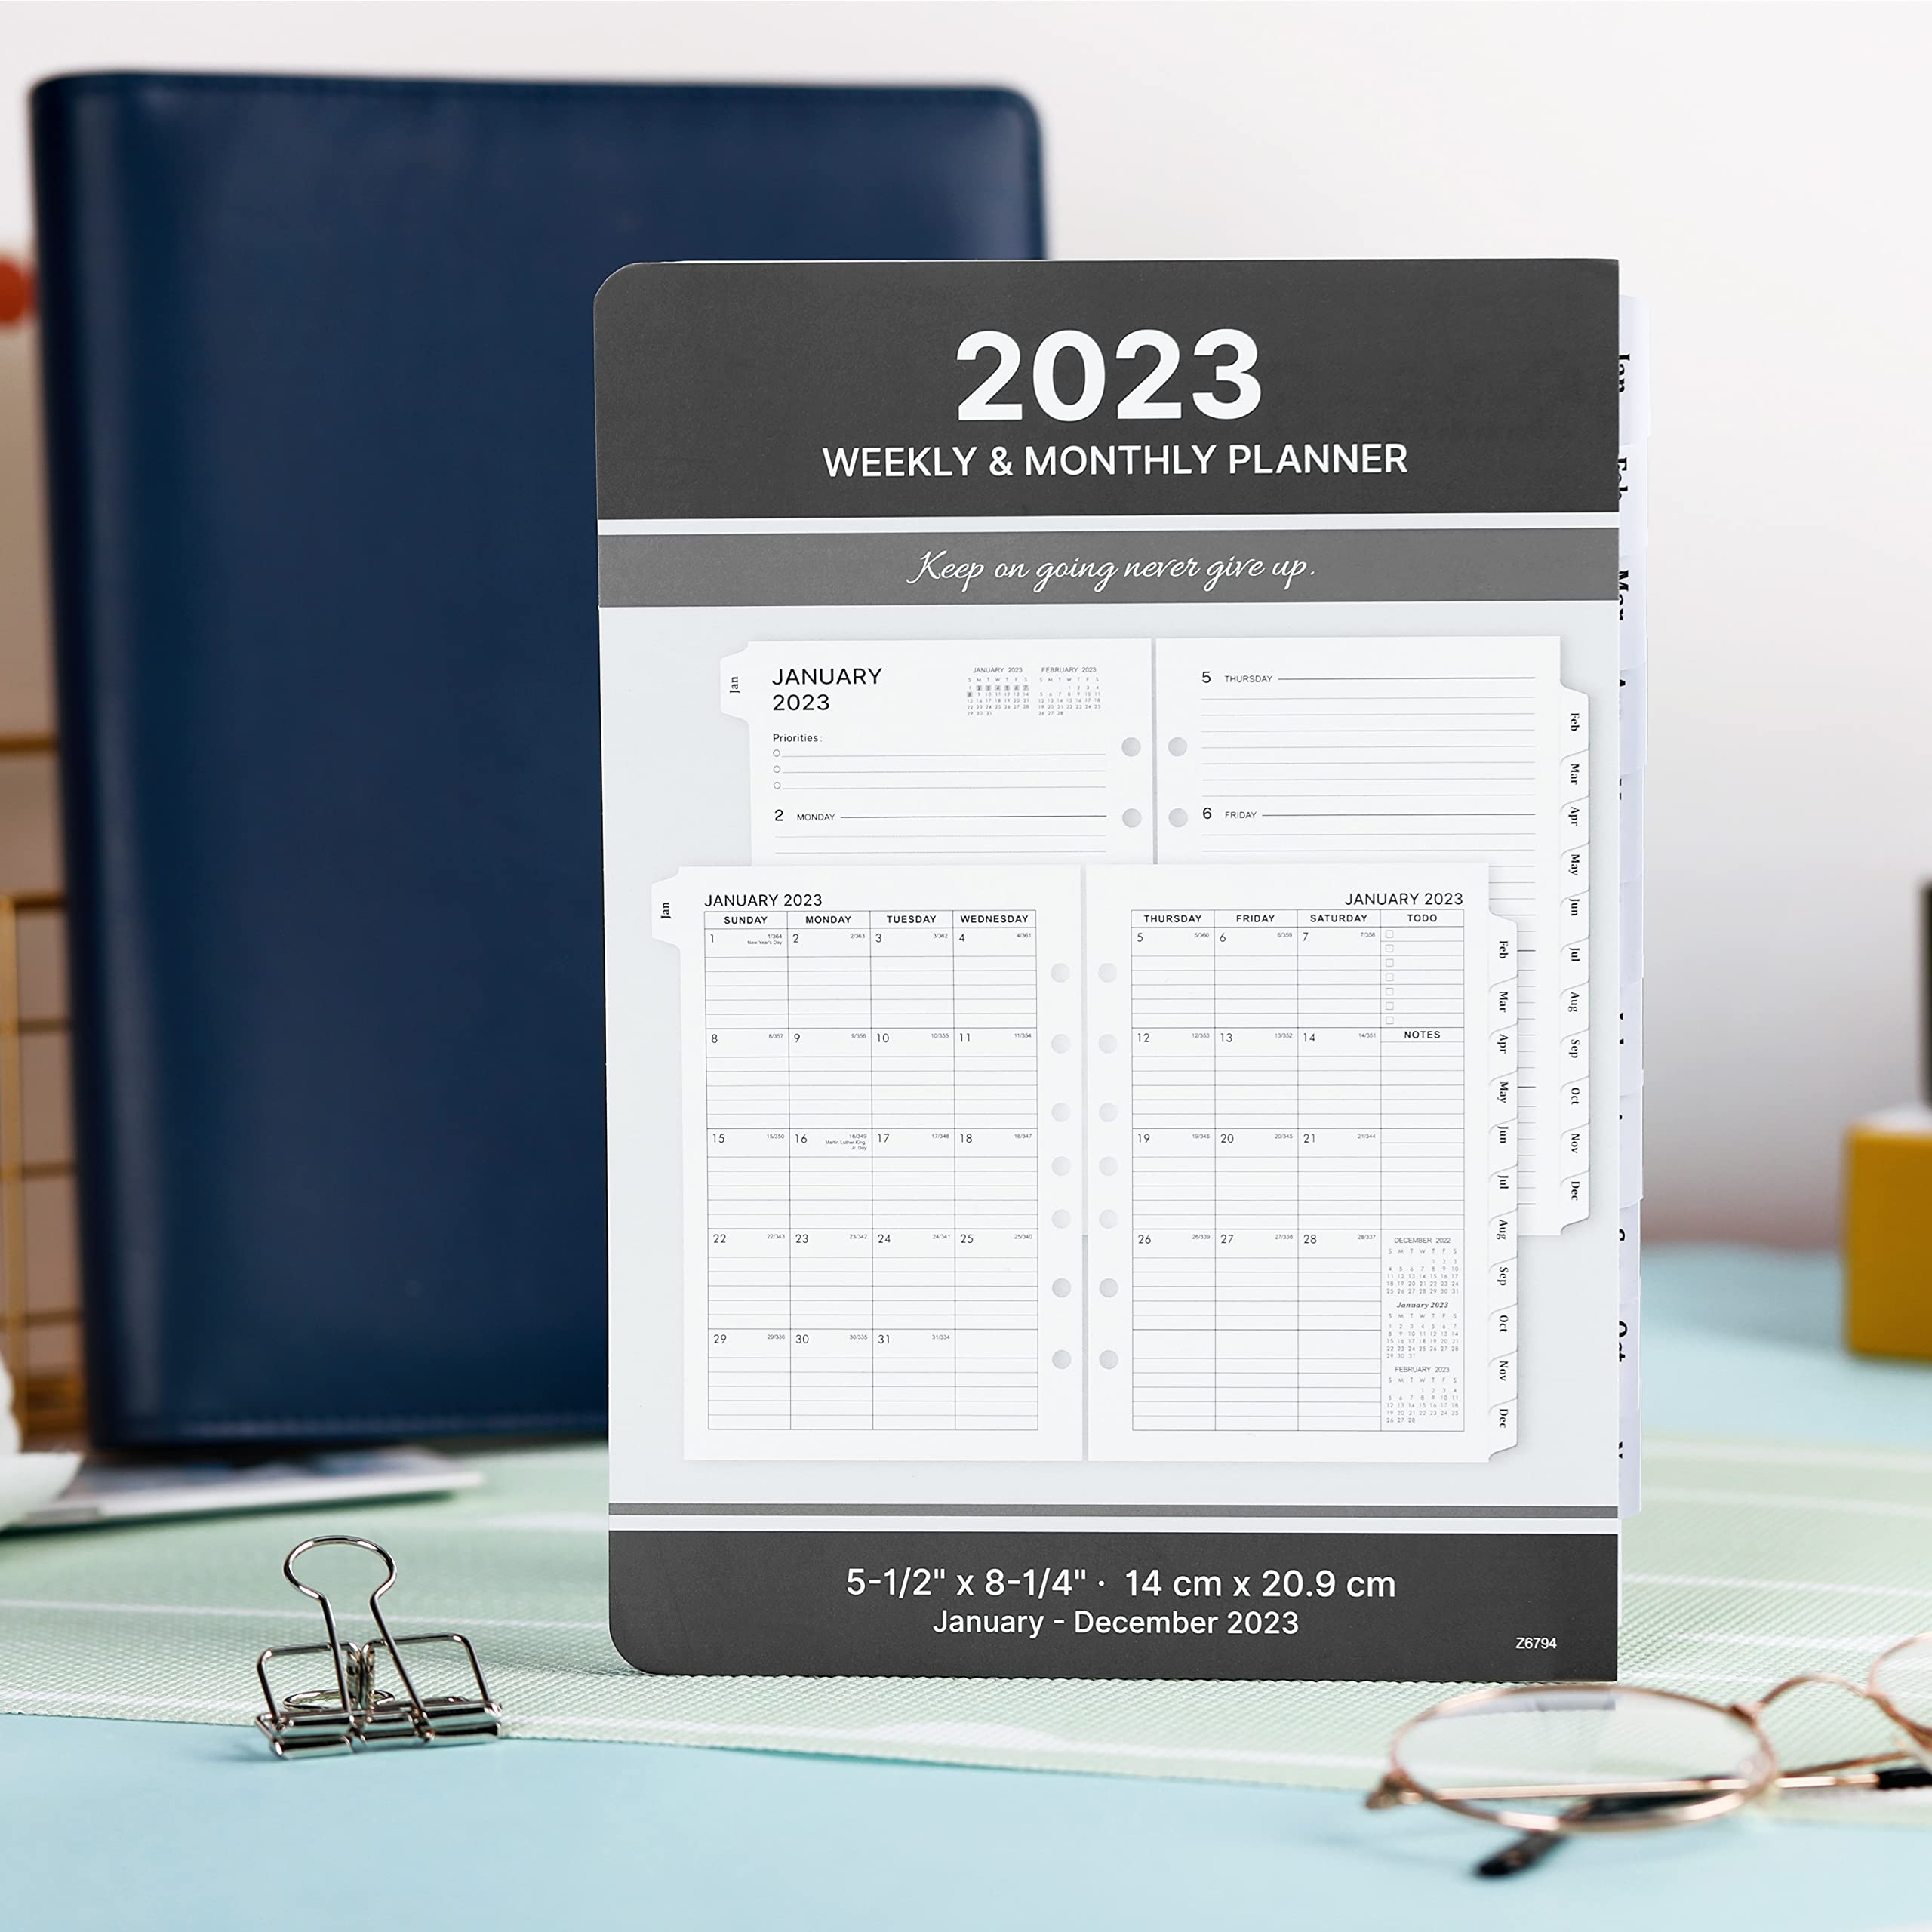 2023-2024 Planner Refills - Planner Refills 2023-2024, 2023-2024 Weekly & Monthly Planner Refills, 2023-2024 Planner Inserts, A5 Planner Refills, A5 Planner Inserts, 5-1/2" x 8-1/4", Jul.2023 -